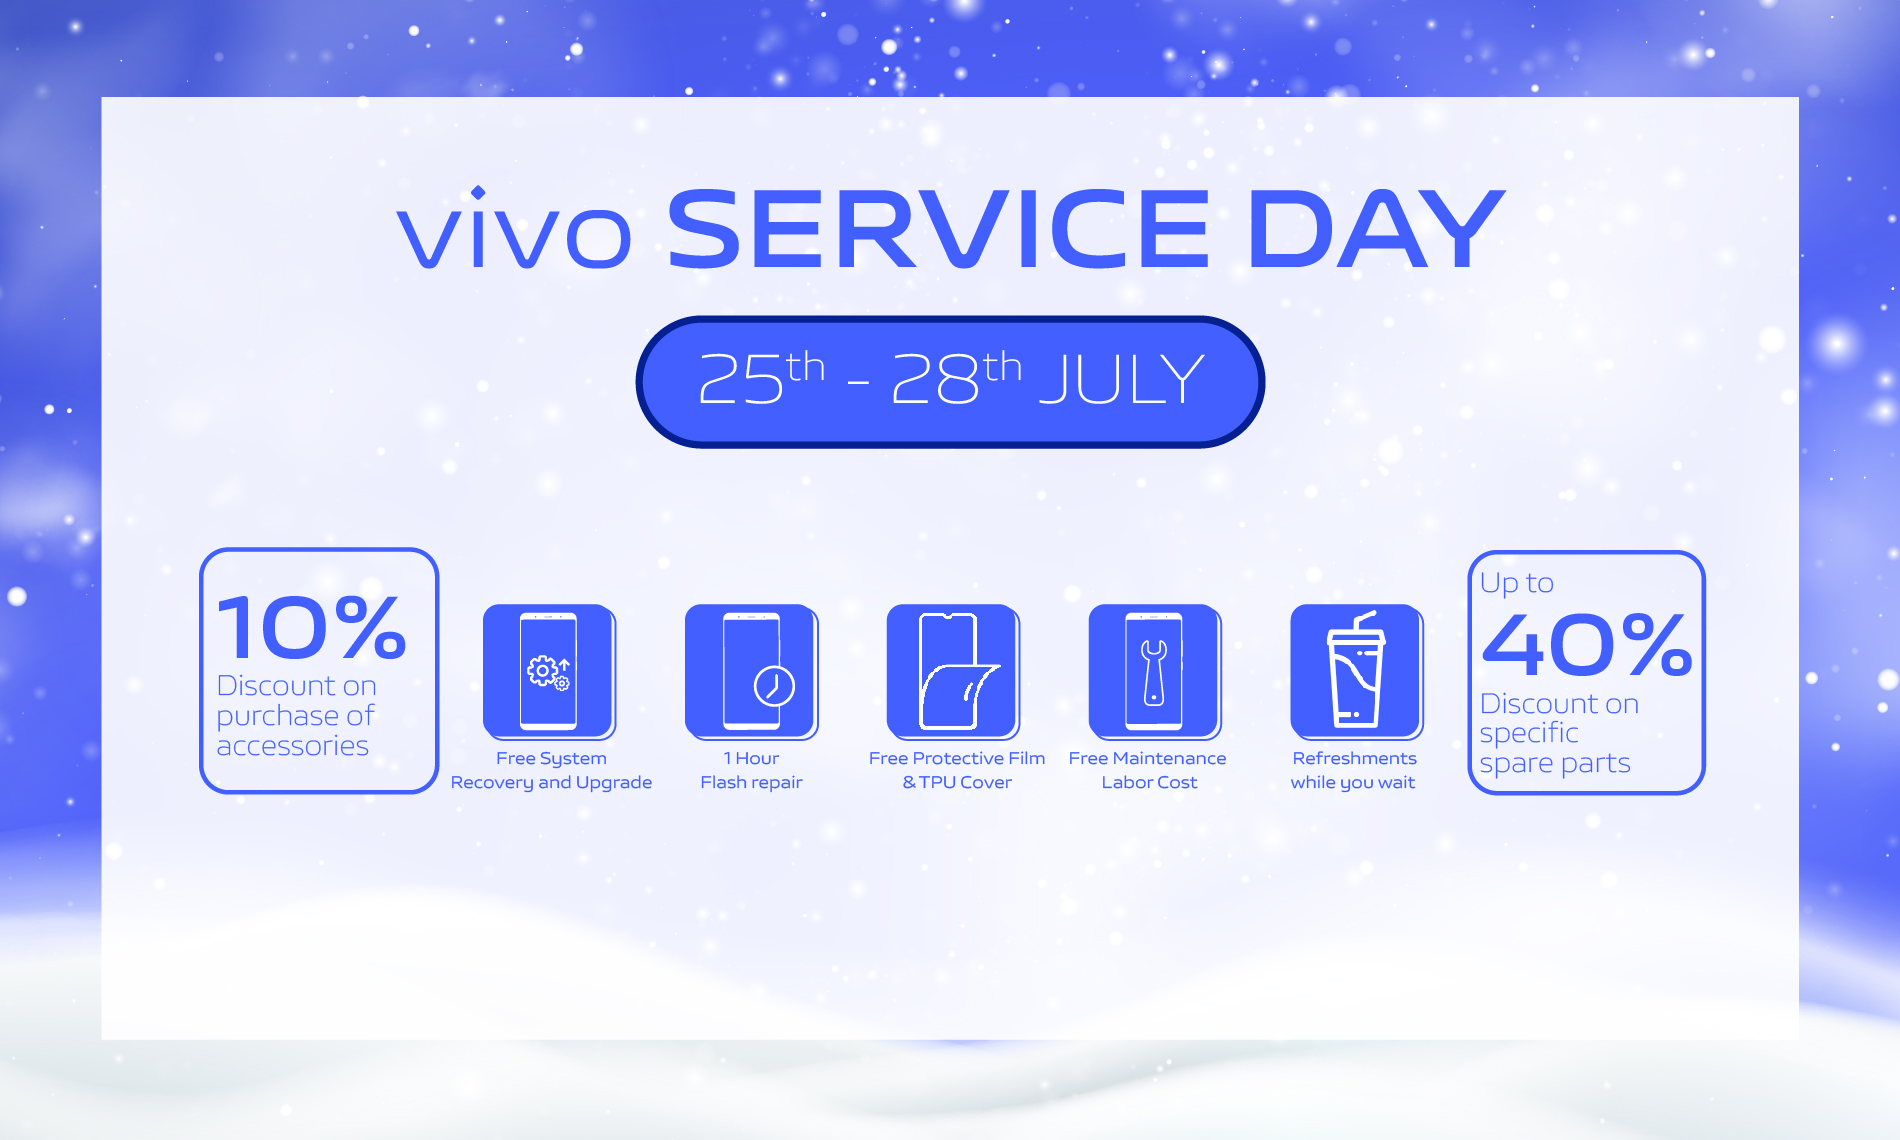 Enjoy vivo Service Day in July